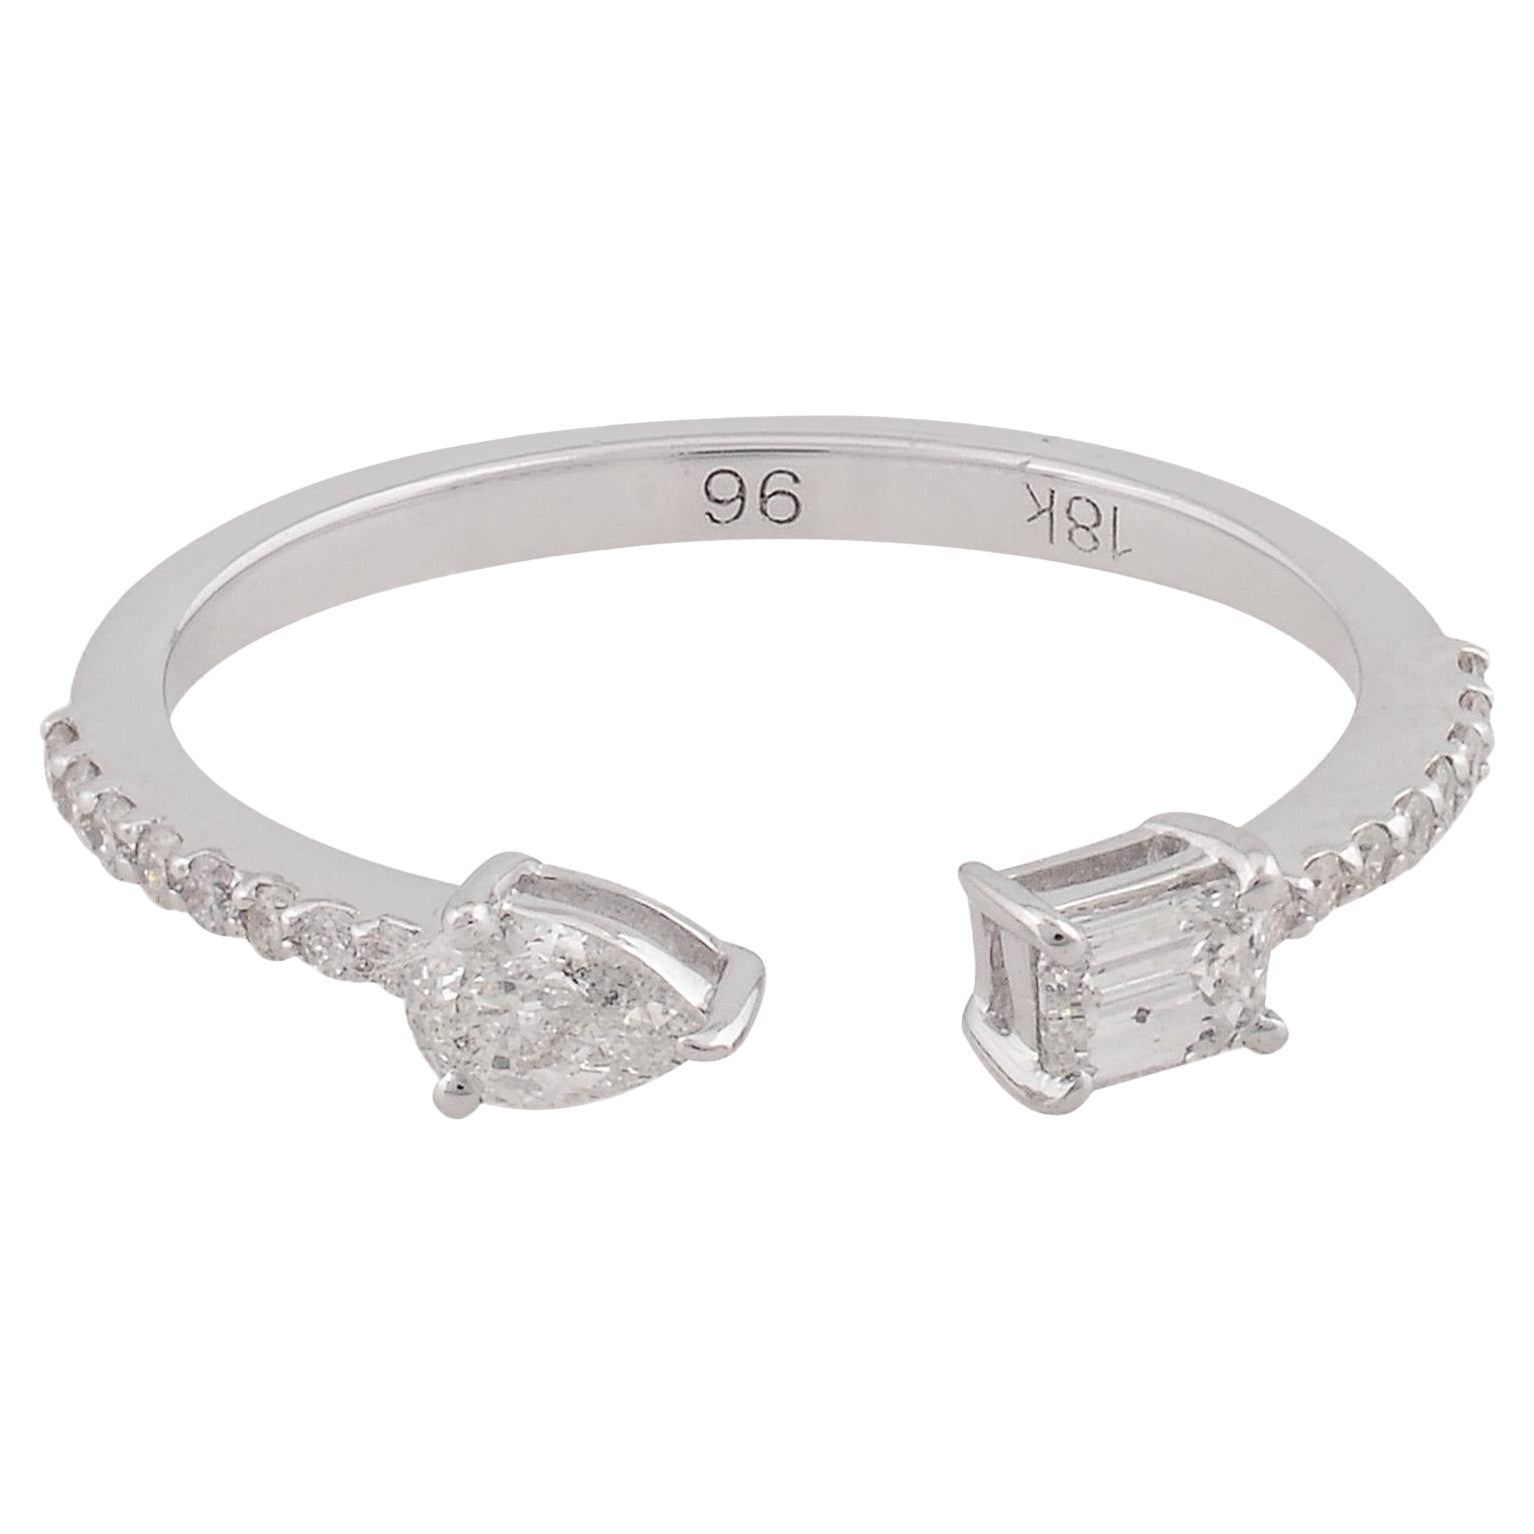 0.41 Carat Pear & Emerald Cut Diamond Cuff Ring 18k White Gold Handmade Jewelry For Sale